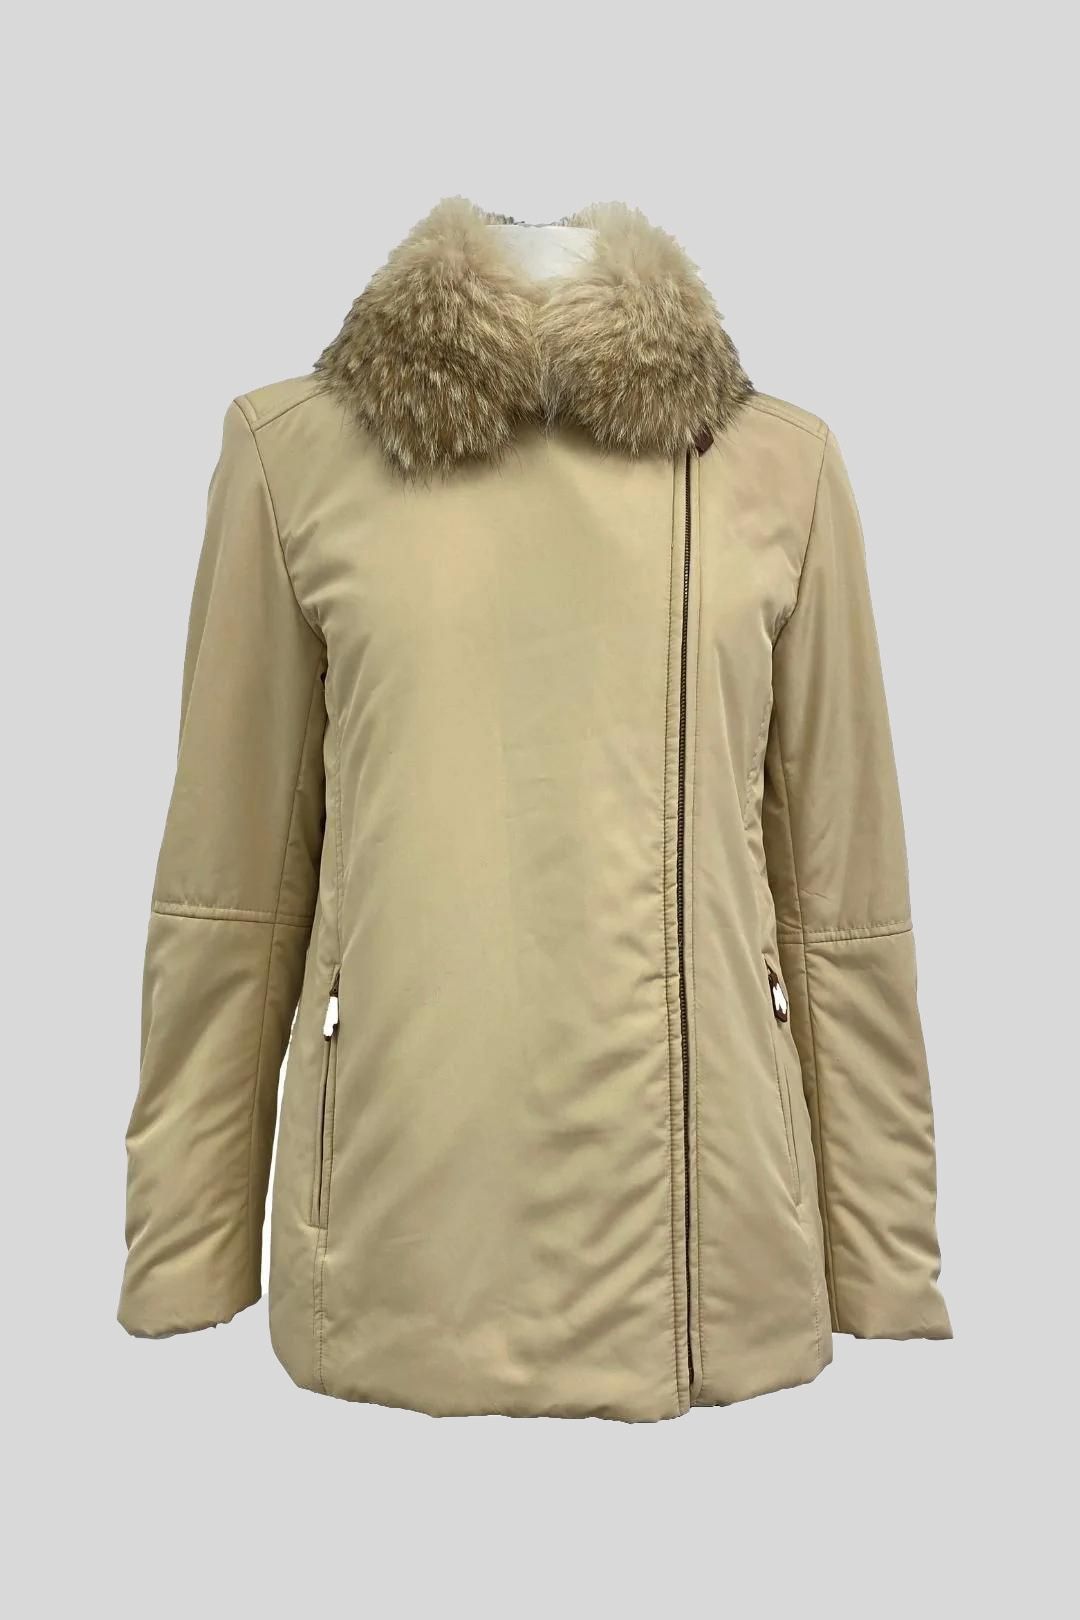 Ralph Lauren - Beige Faux Fur Trim Collar Jacket